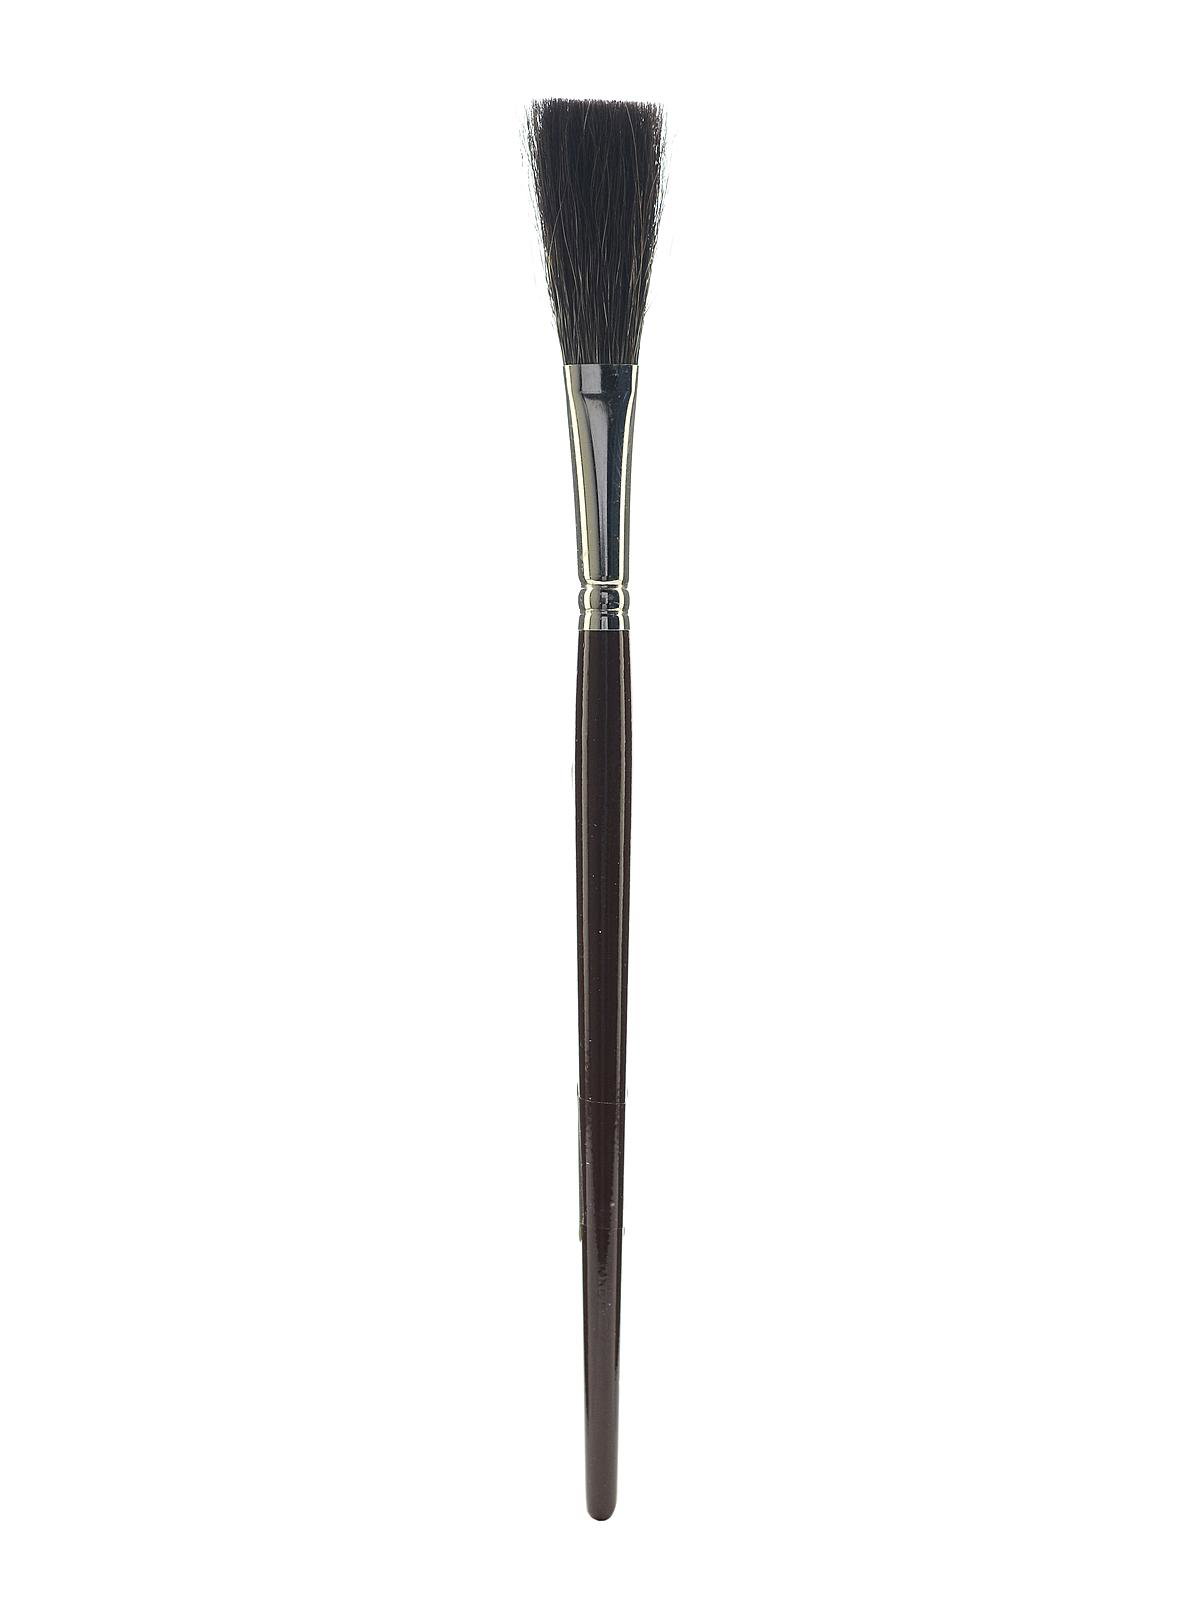 Andrew Mack Brush AMVD-SL-SET Von Dago Saber Liner Set of 6 Pinstriping  Brushes Sizes 4/0-6 